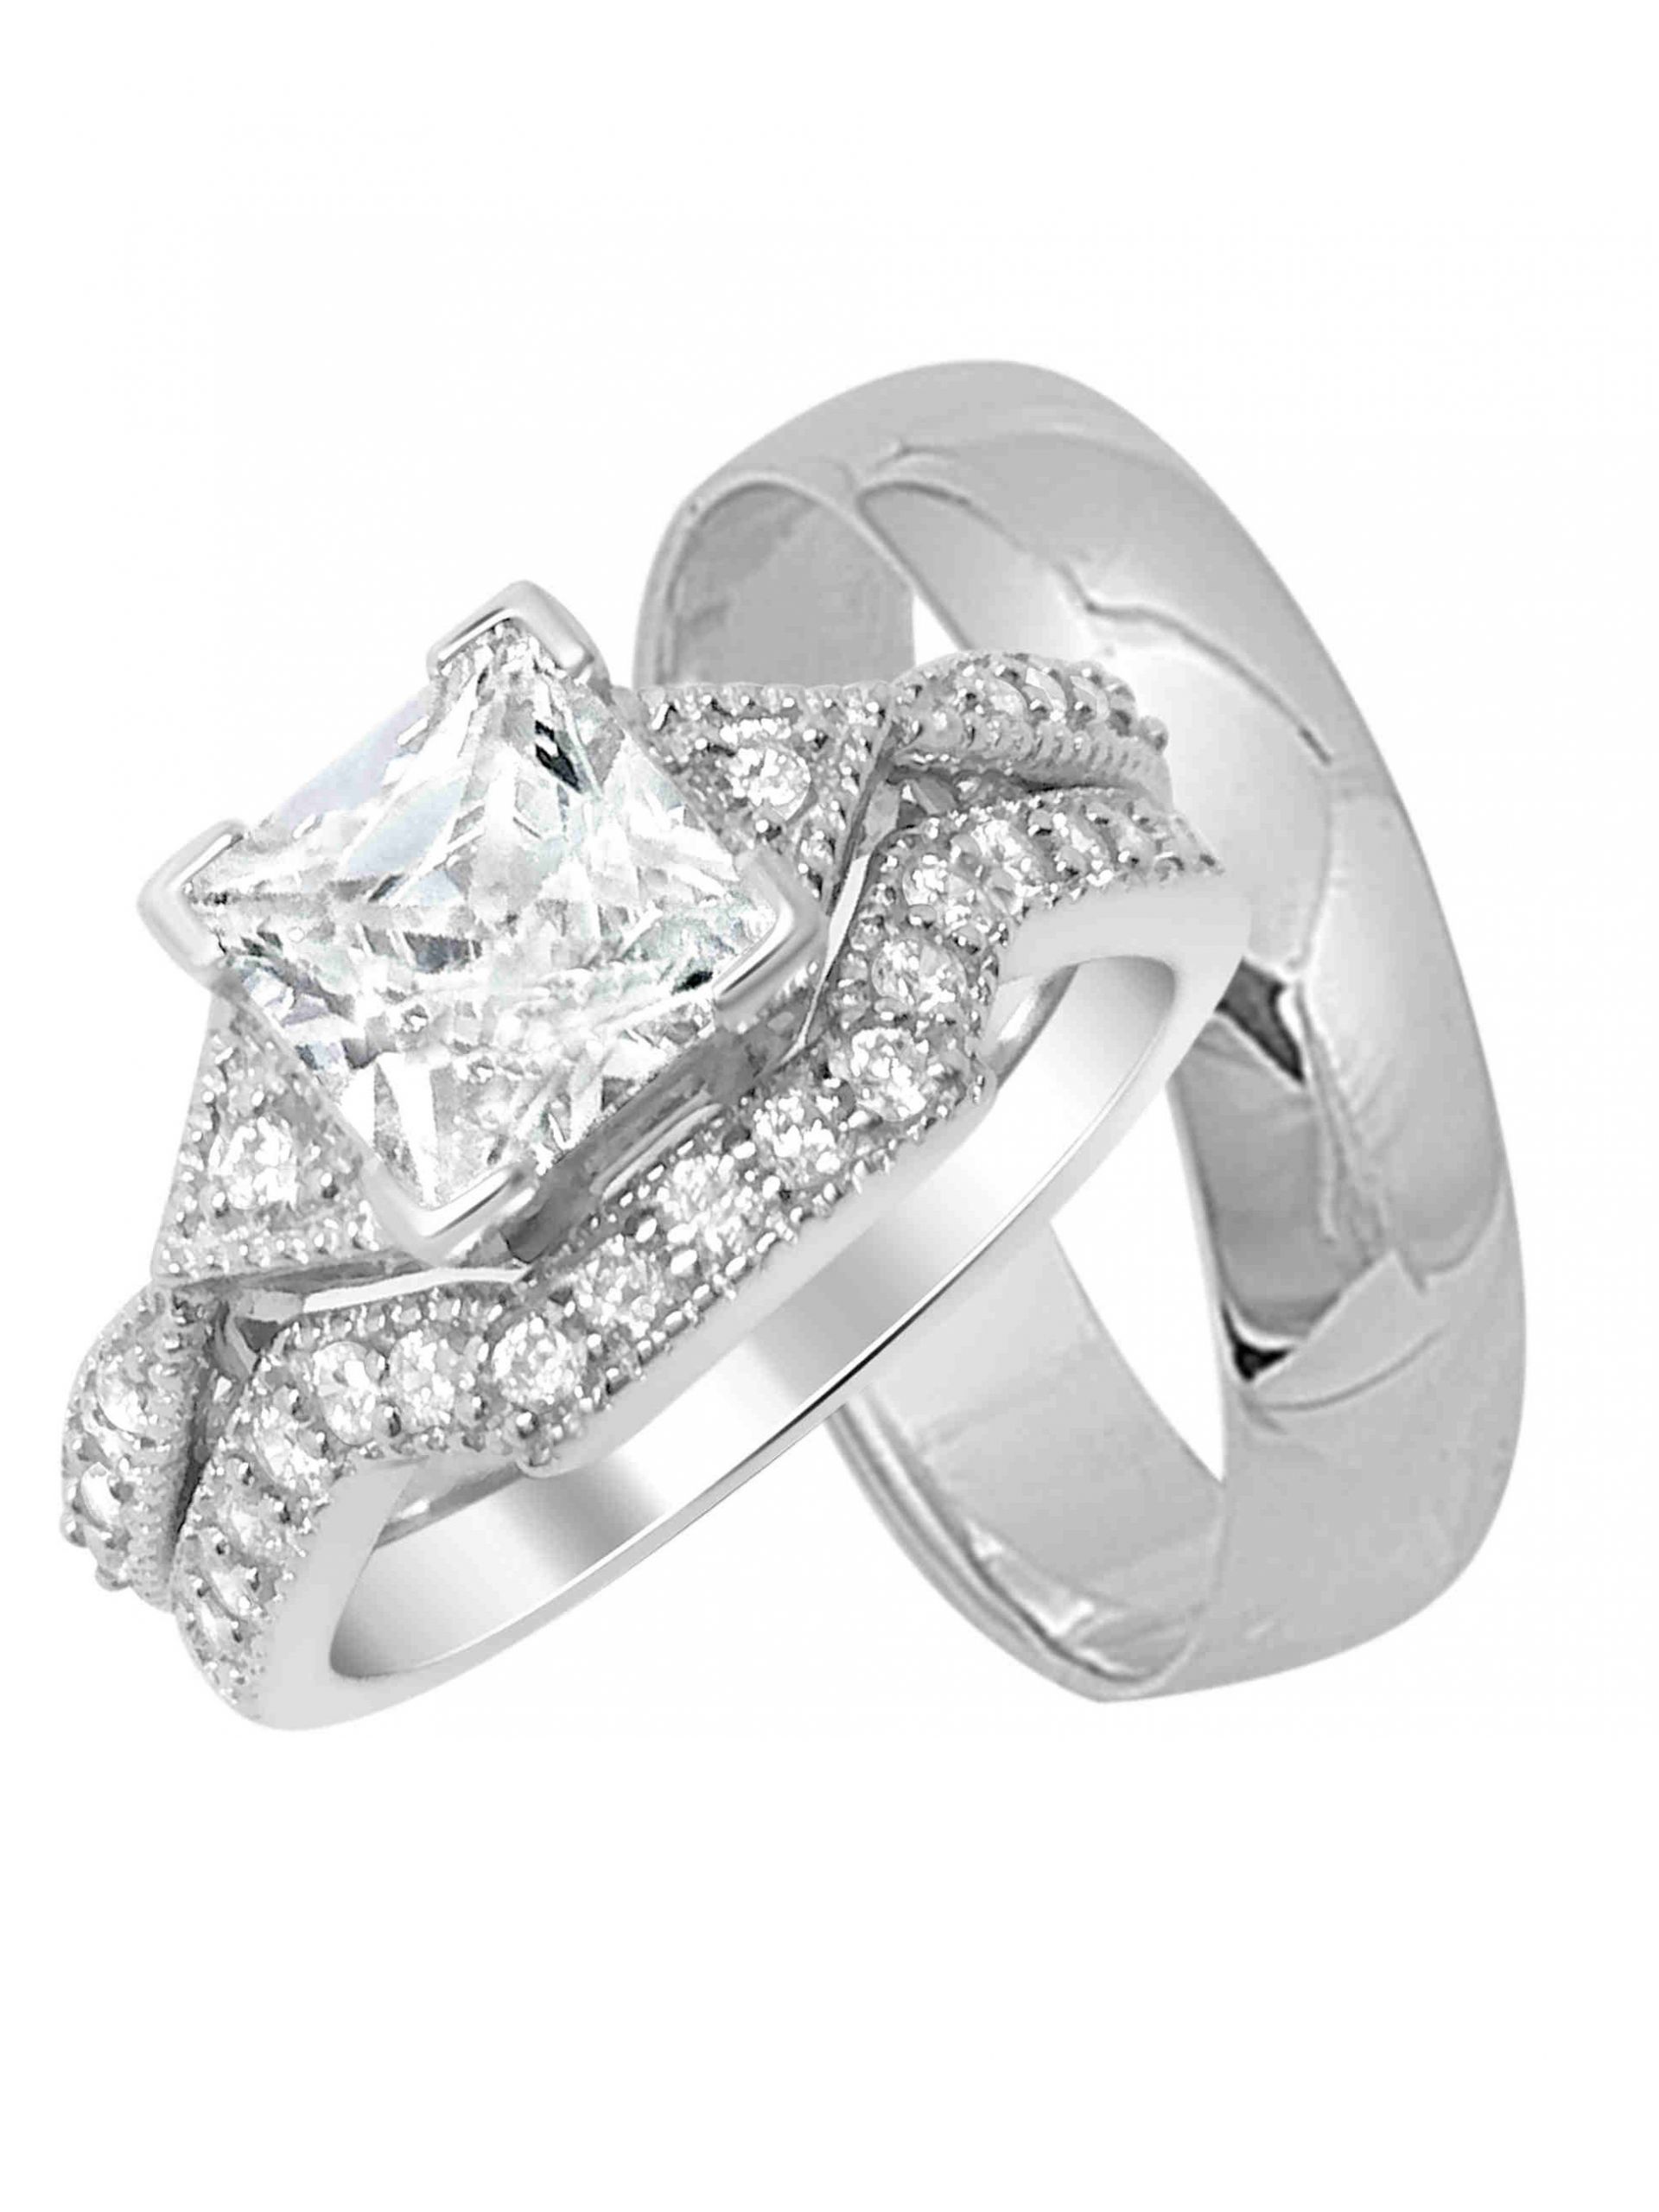 Walmart Wedding Ring Sets
 LaRaso & Co His Hers Silver Matching Wedding Bands Ring